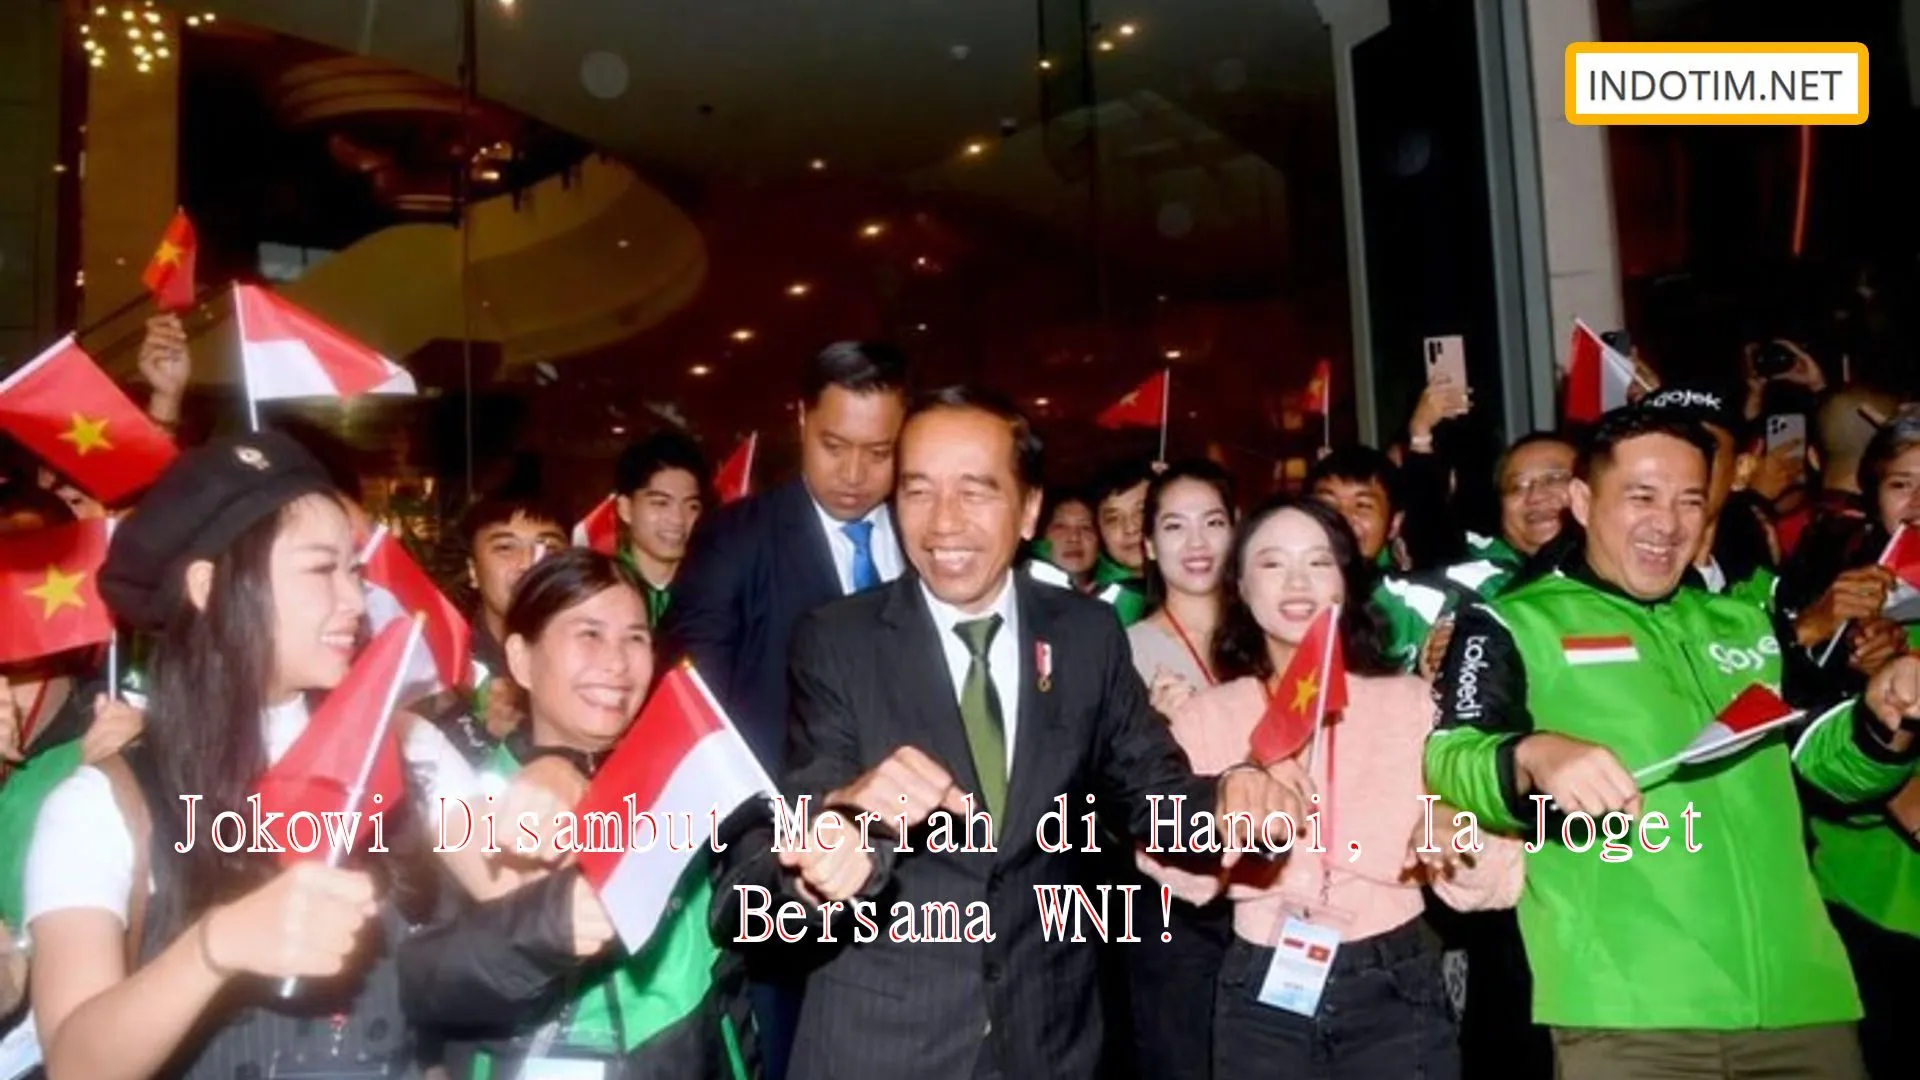 Jokowi Disambut Meriah di Hanoi, Ia Joget Bersama WNI!